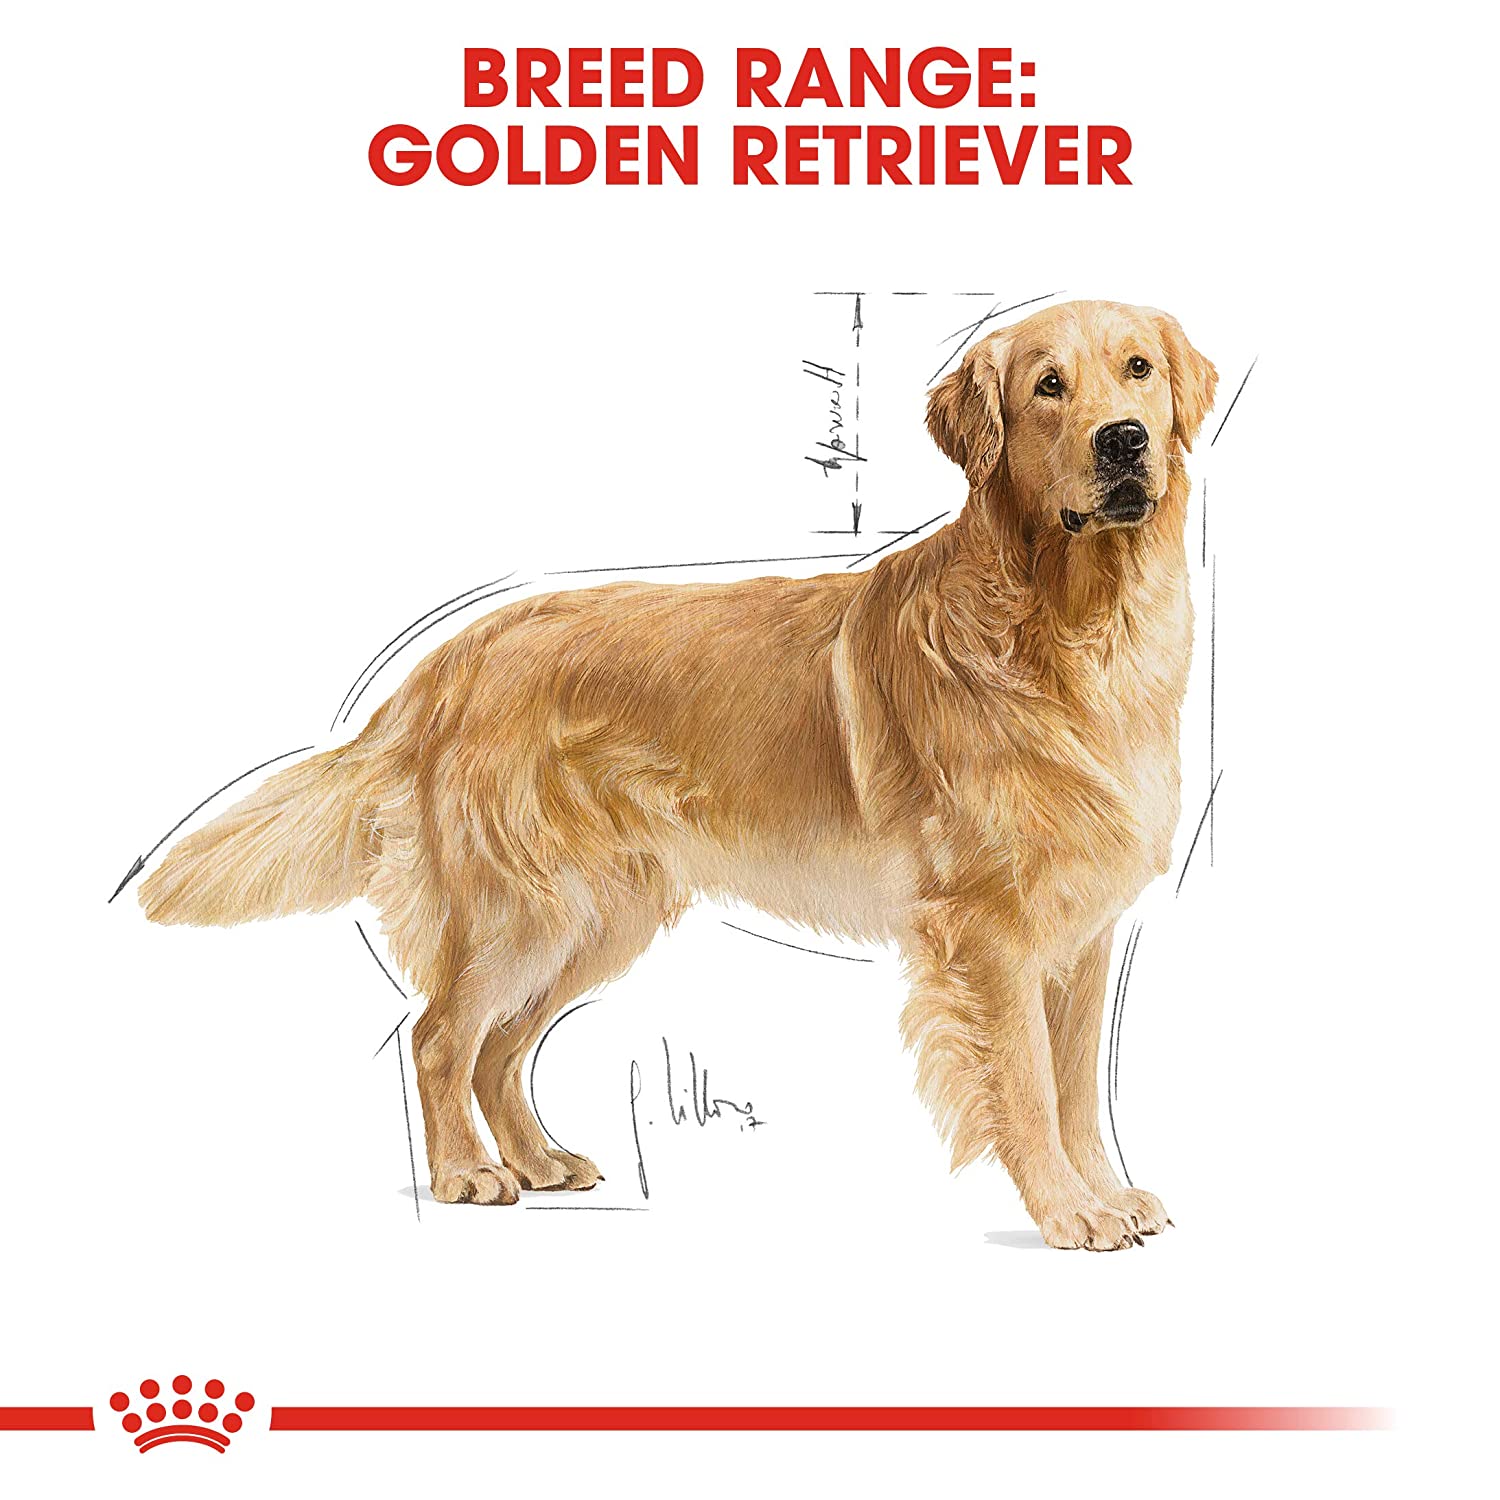 Royal Canin Golden Retriever (1+) Dog dry food